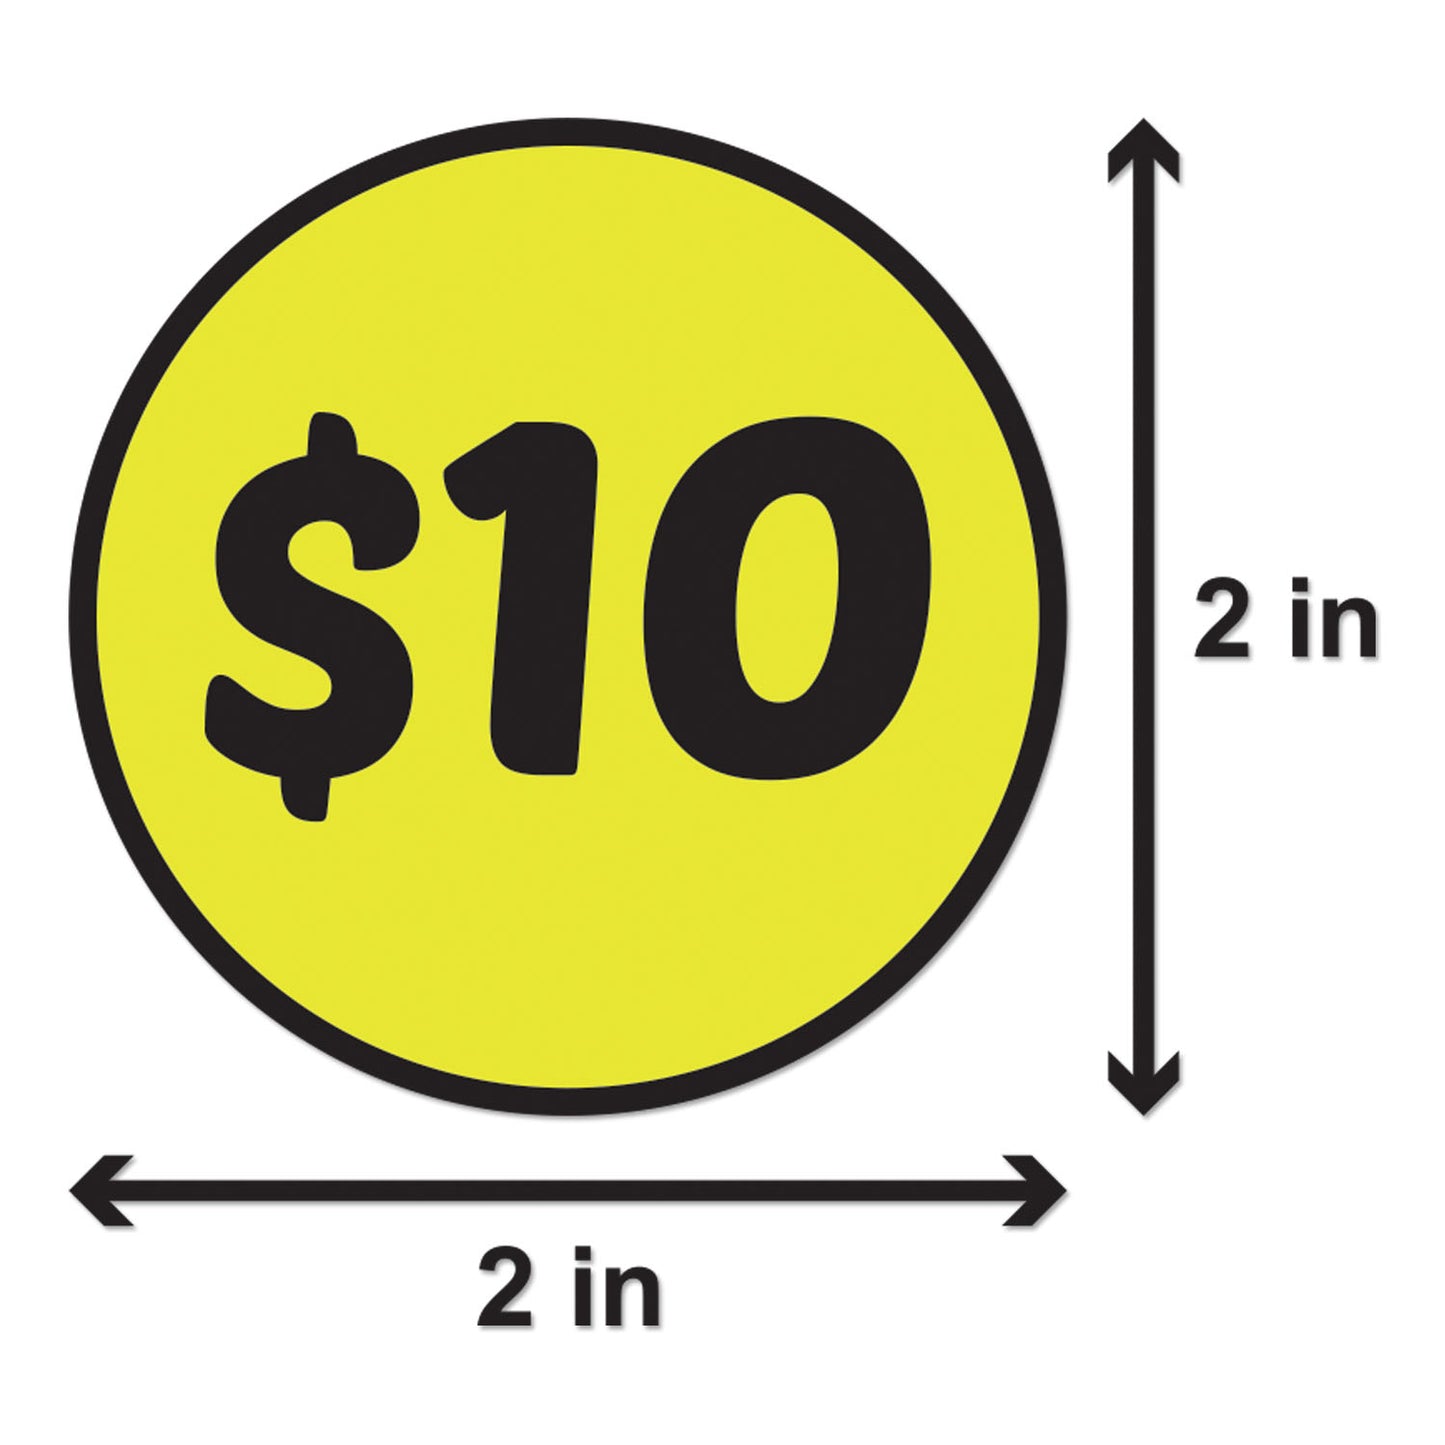 2 inch | Retail & Sales: 10 Dollar Stickers / $10 Dollar Price Stickers